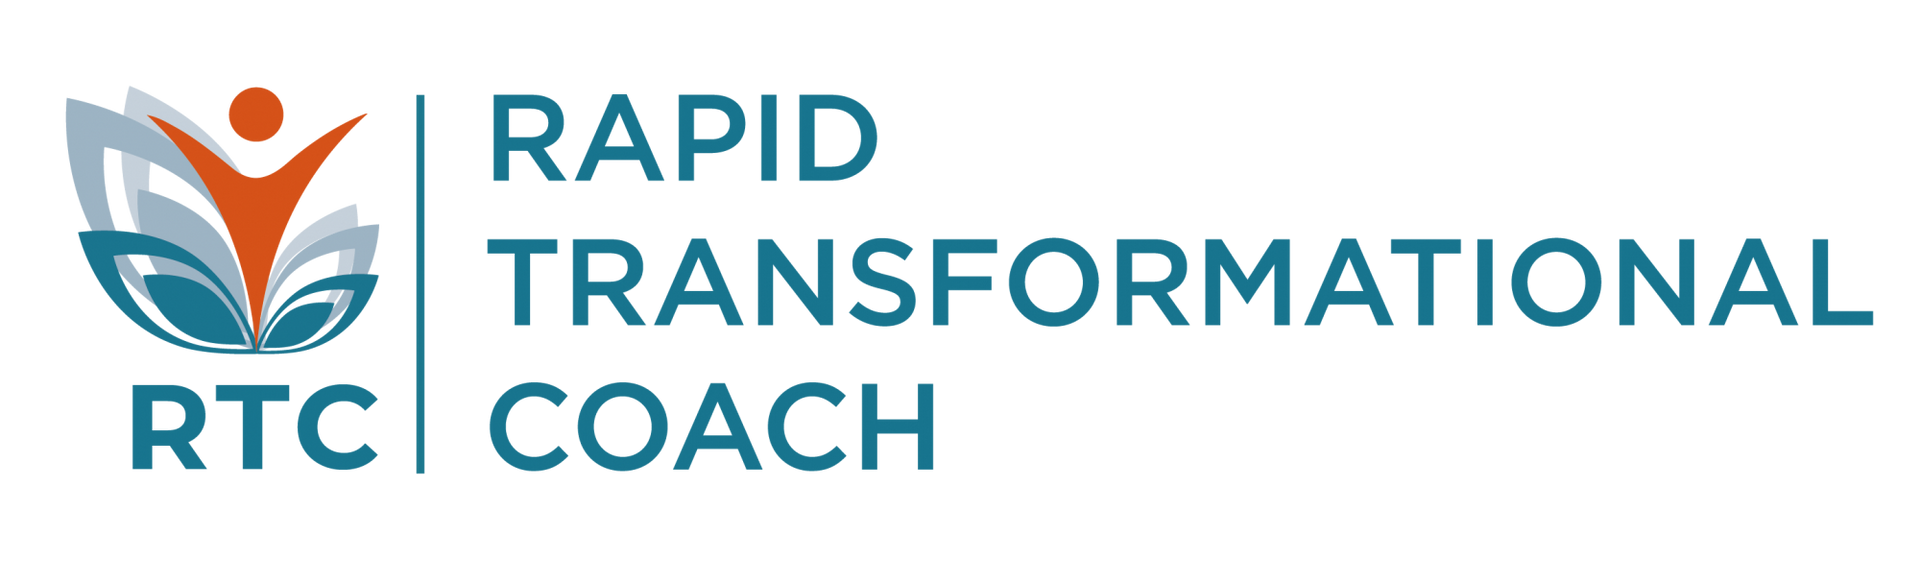 Rapid Transformational coach by Marisa Peer Founder of RTT